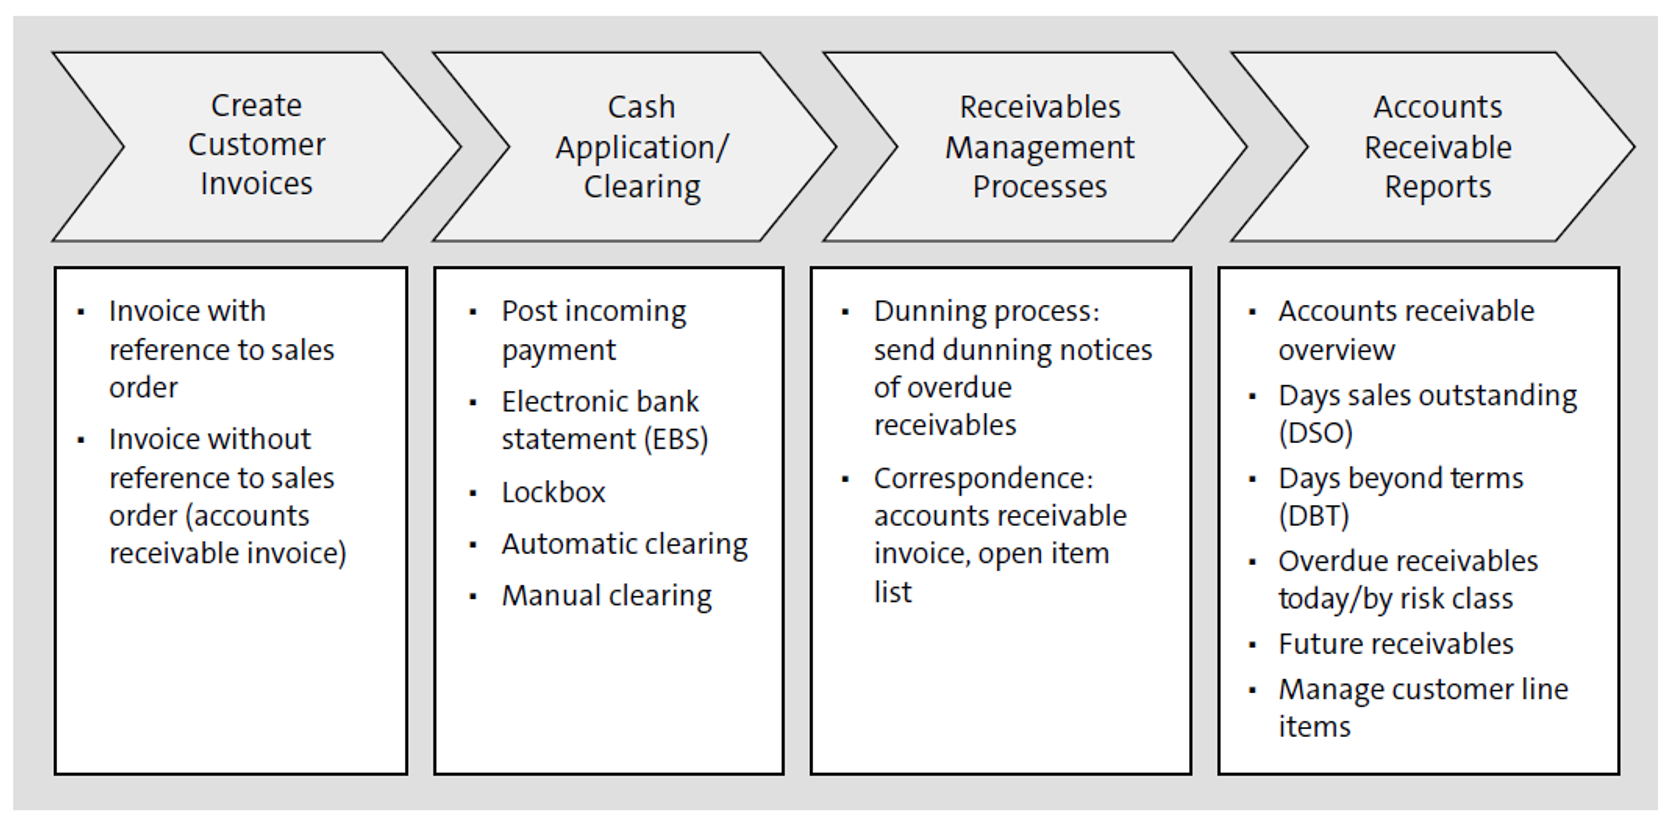 Accounts Receivable Functionality in SAP S/4HANA